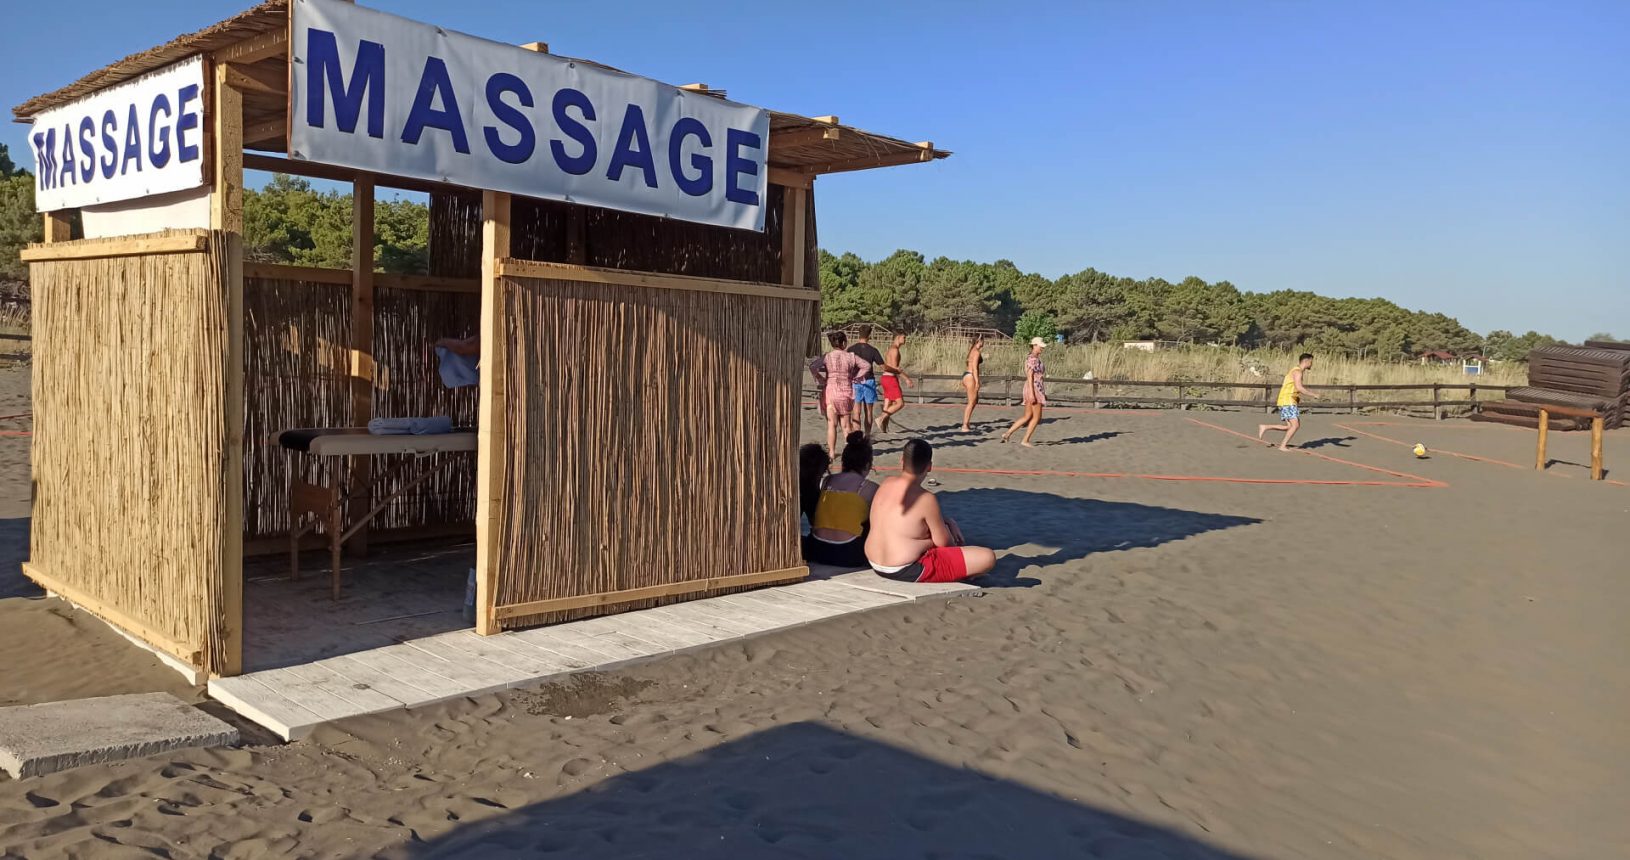 Europa Beach massage service